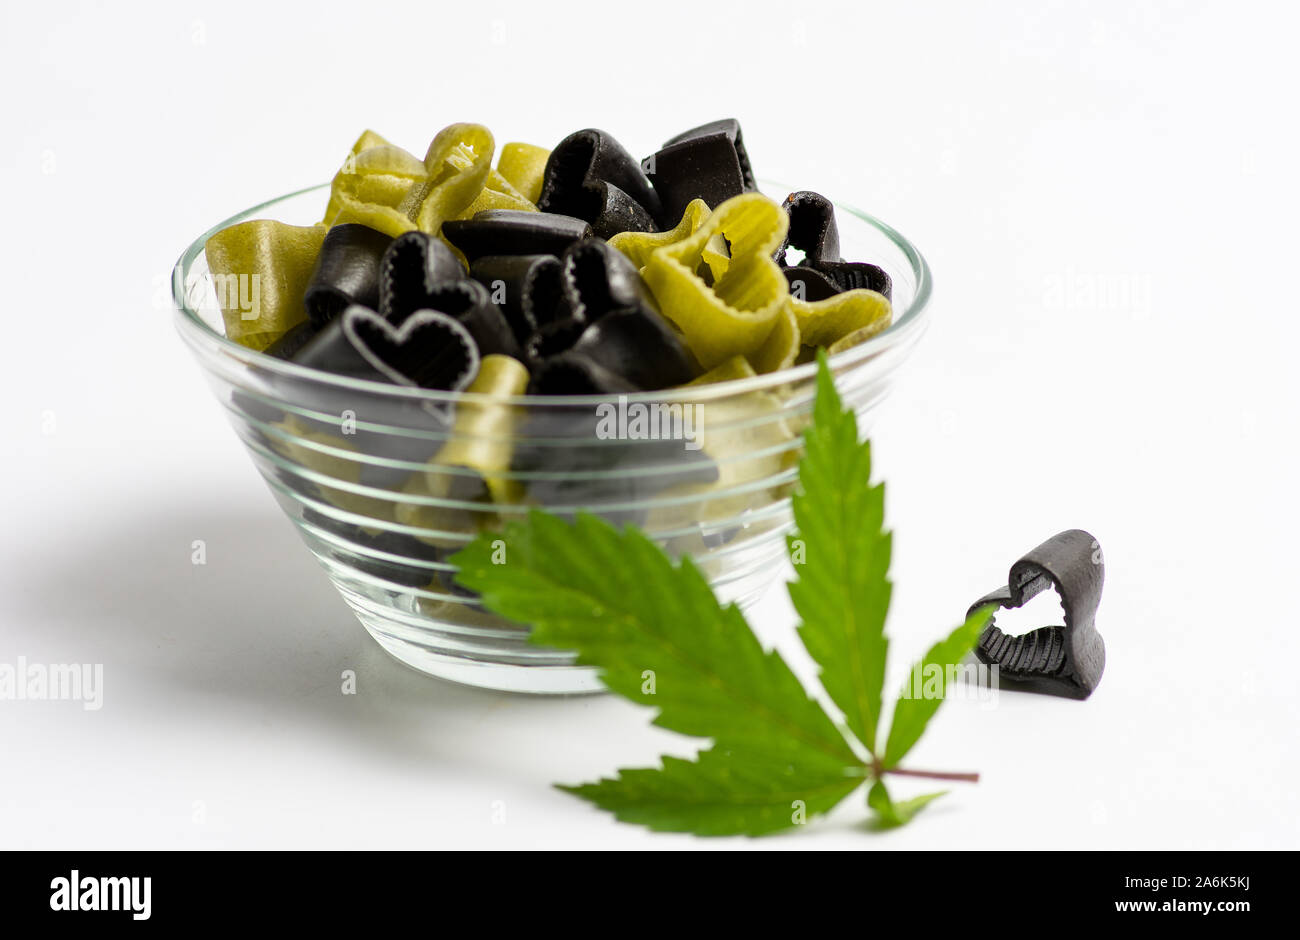 https://c8.alamy.com/comp/2A6K5KJ/green-pasta-and-marijuana-leaves-isolated-on-white-2A6K5KJ.jpg